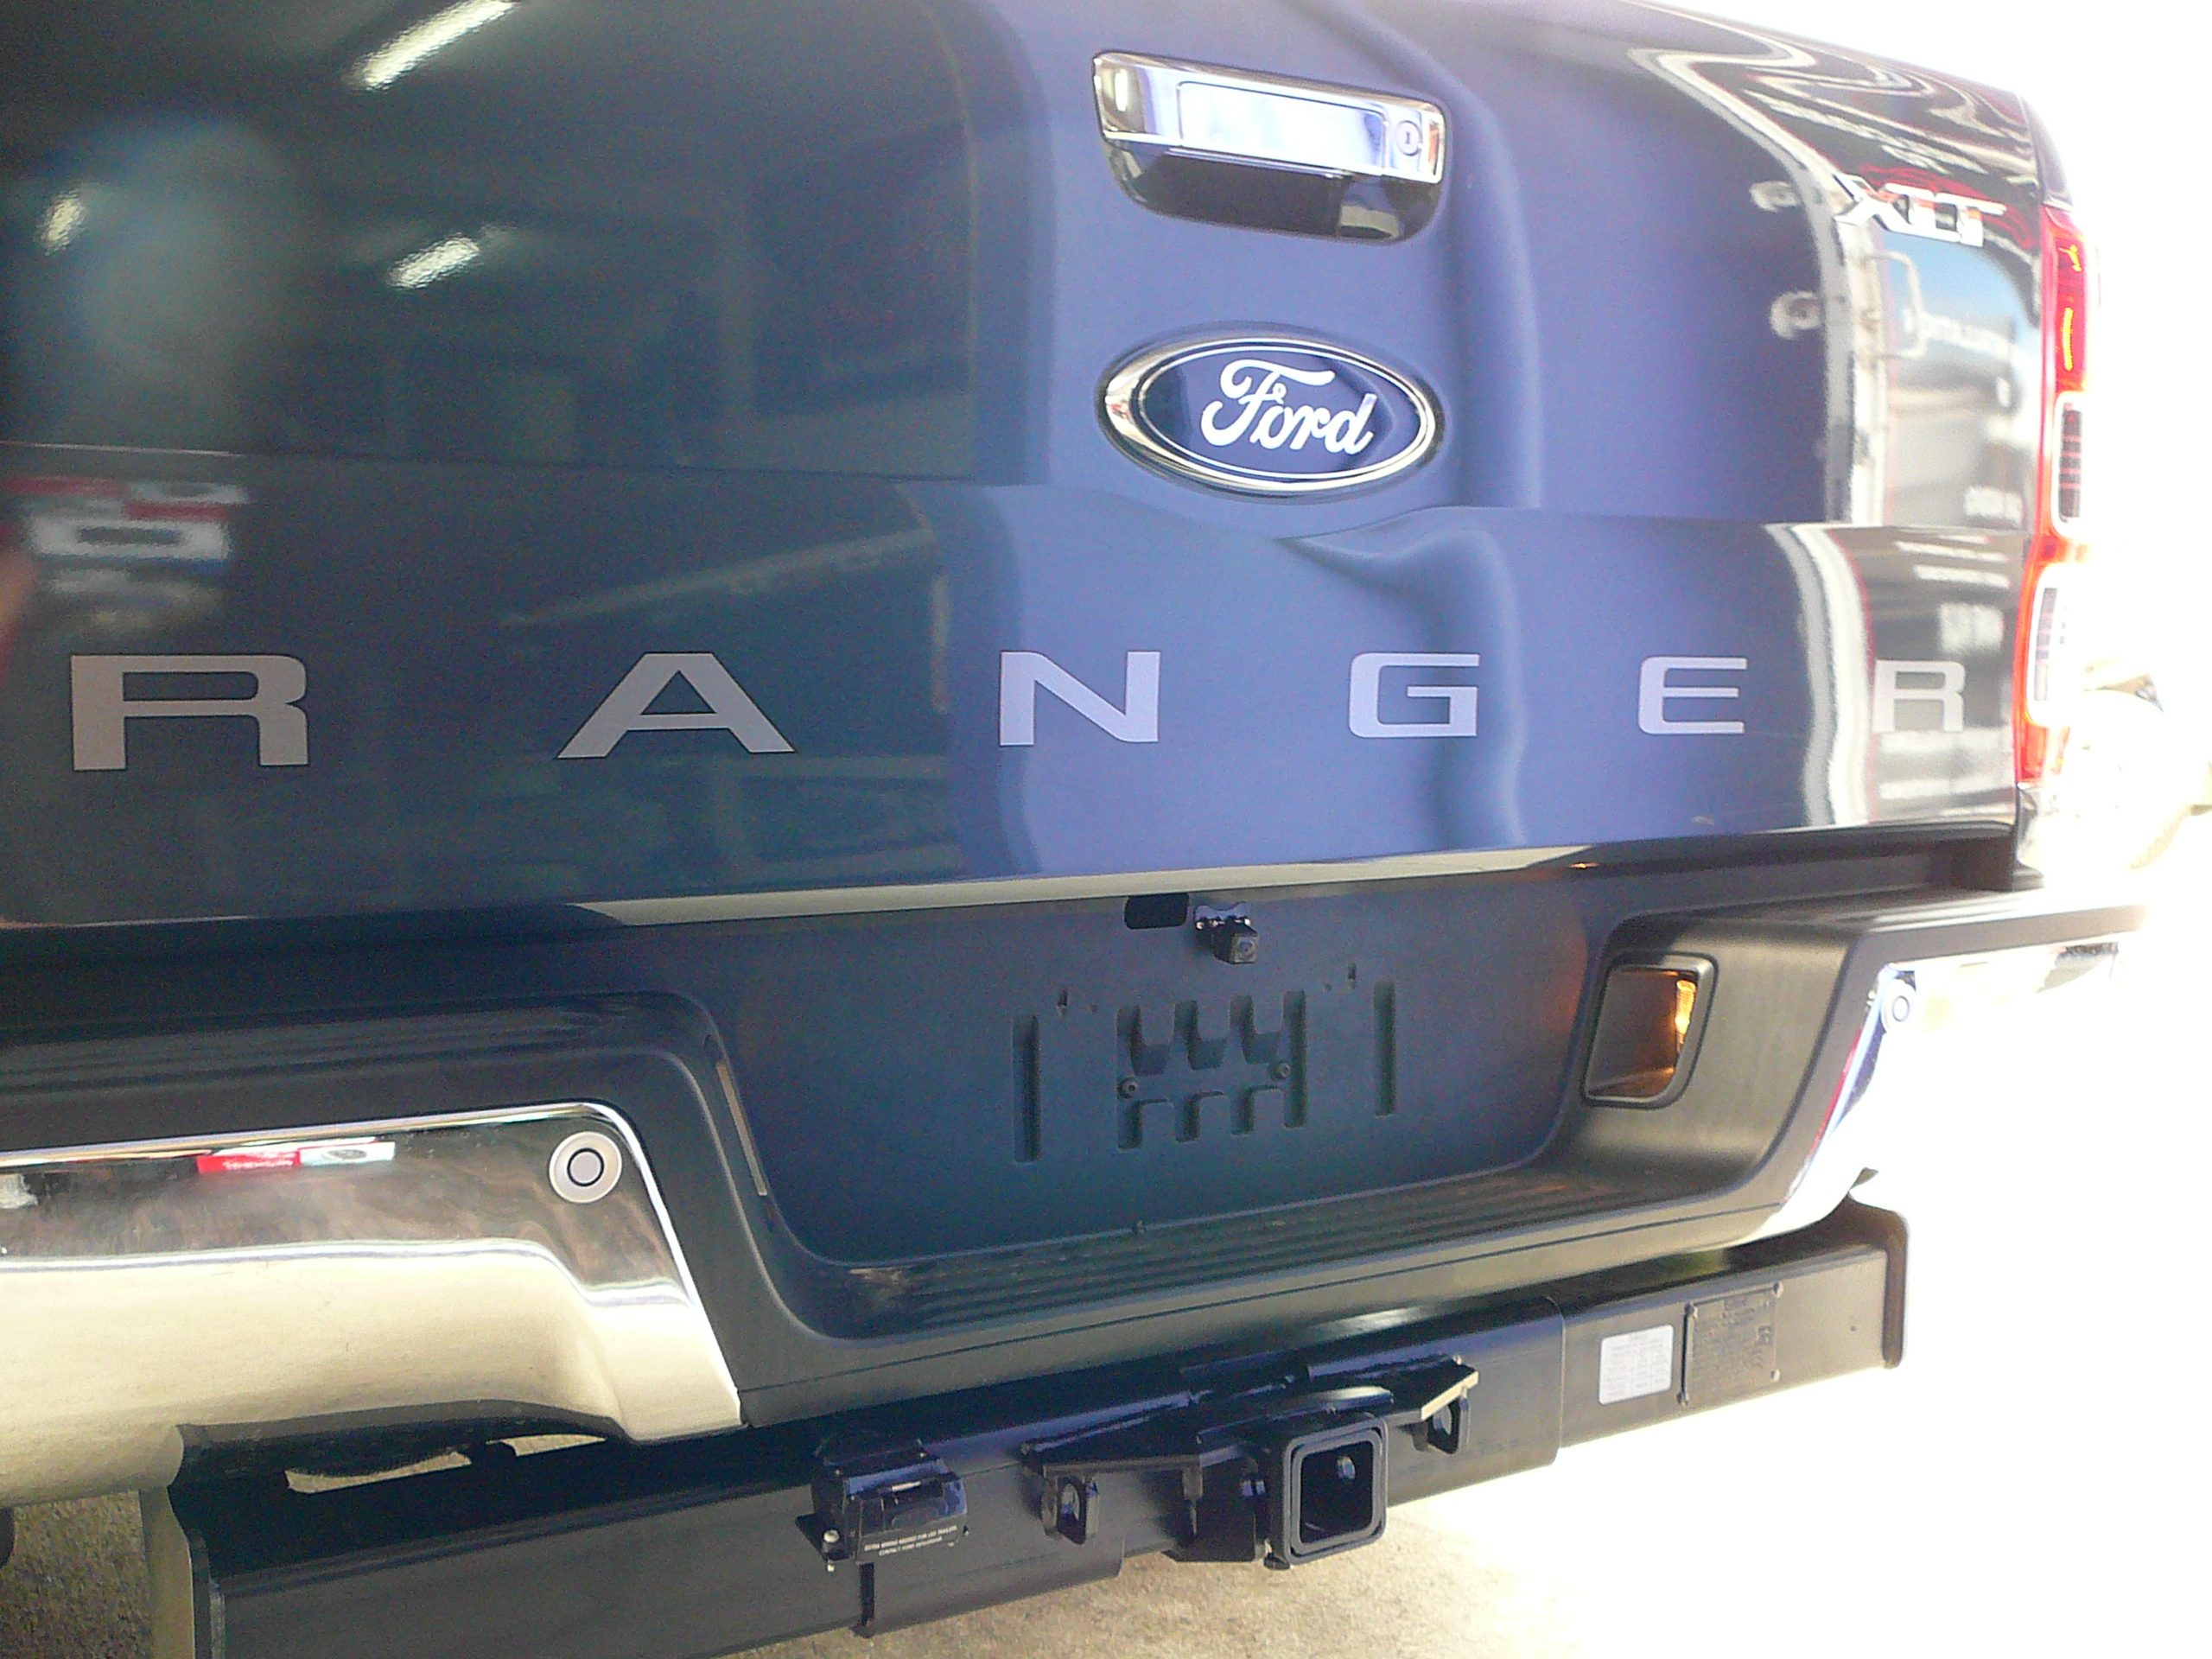 Ford Ranger 2013, GPS Navigation Mirror ith Reverse Camera